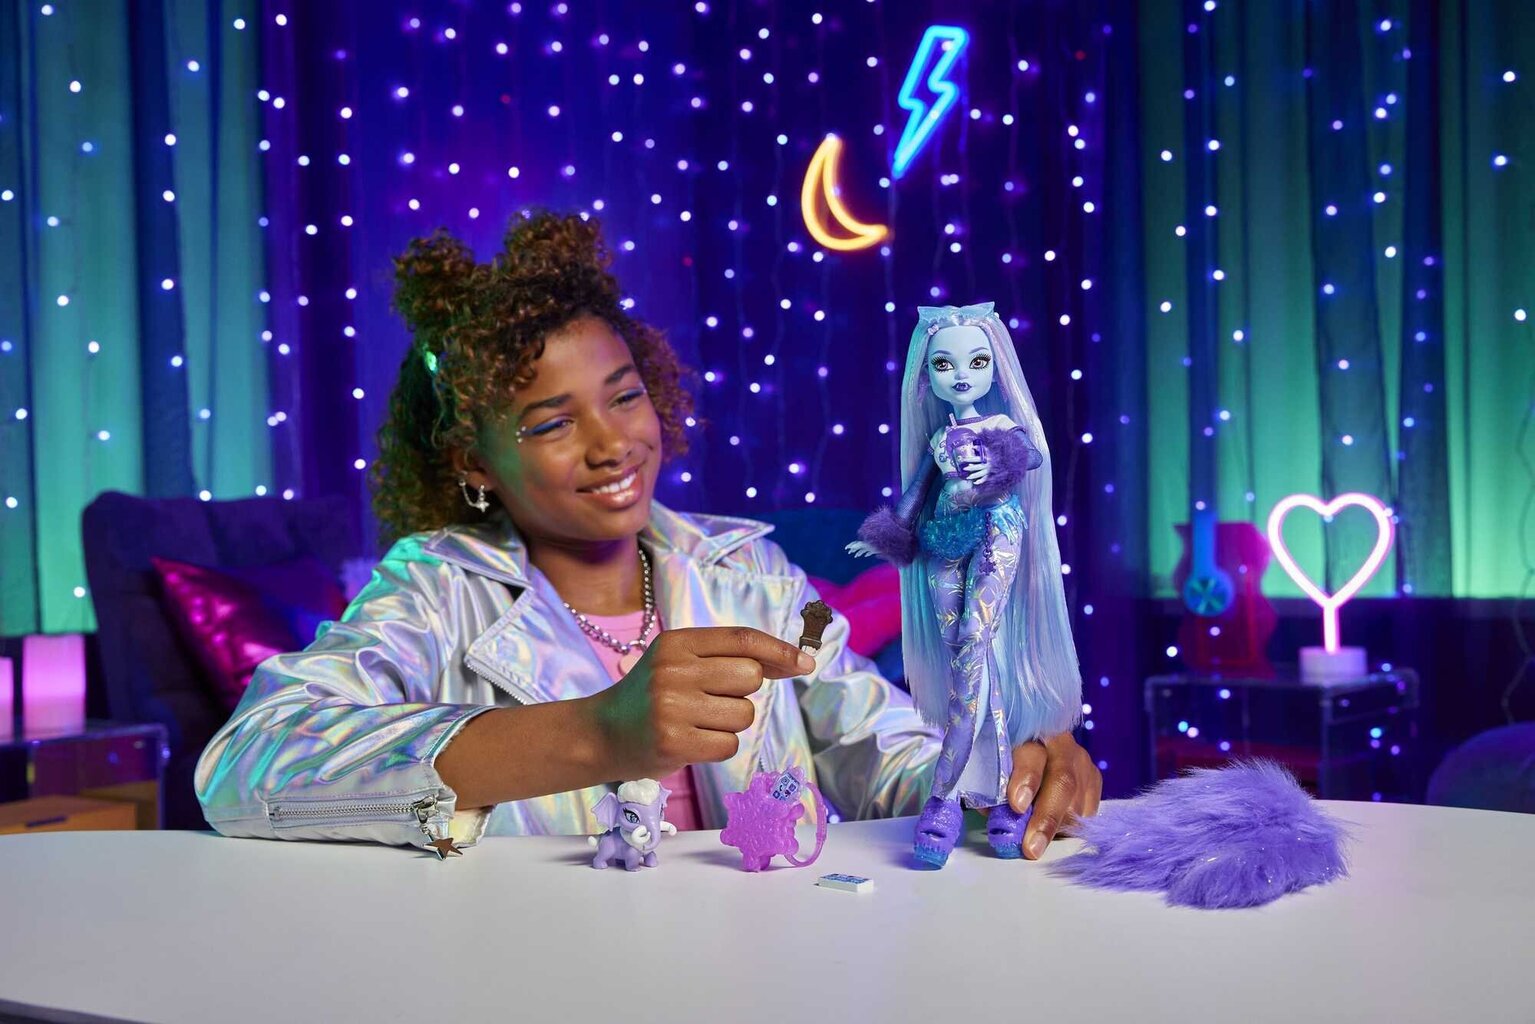 Lelle Monster High Abbey, 30 cm cena un informācija | Rotaļlietas meitenēm | 220.lv